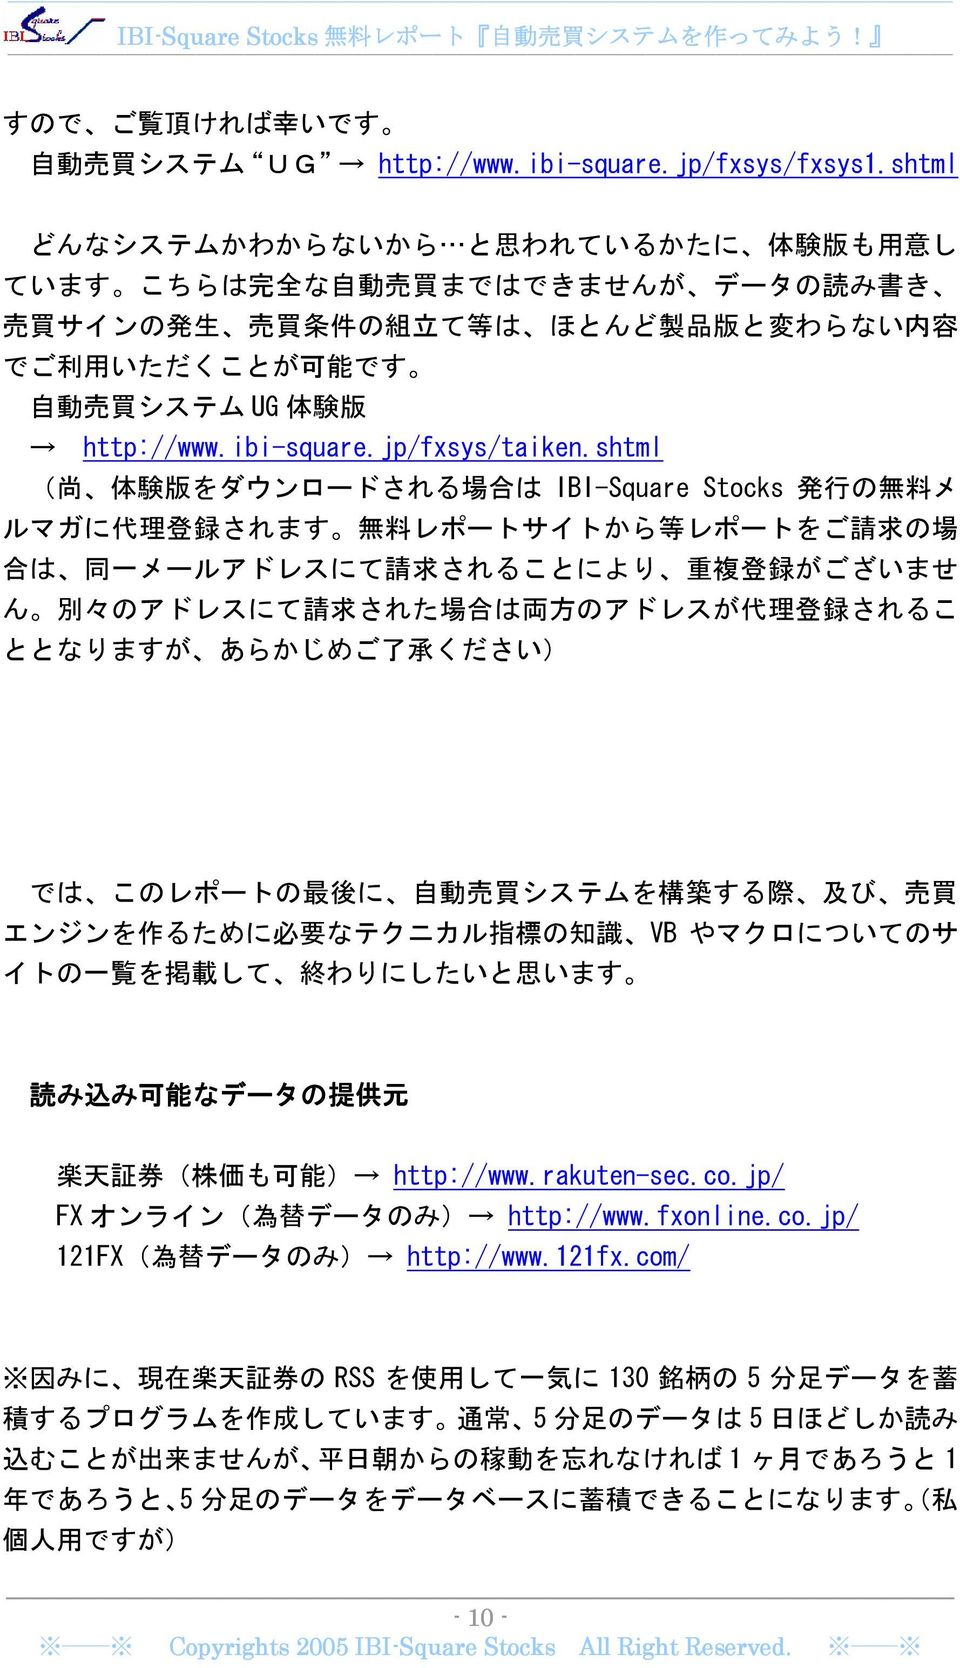 http://www.ibi-square.jp/fxsys/taiken.